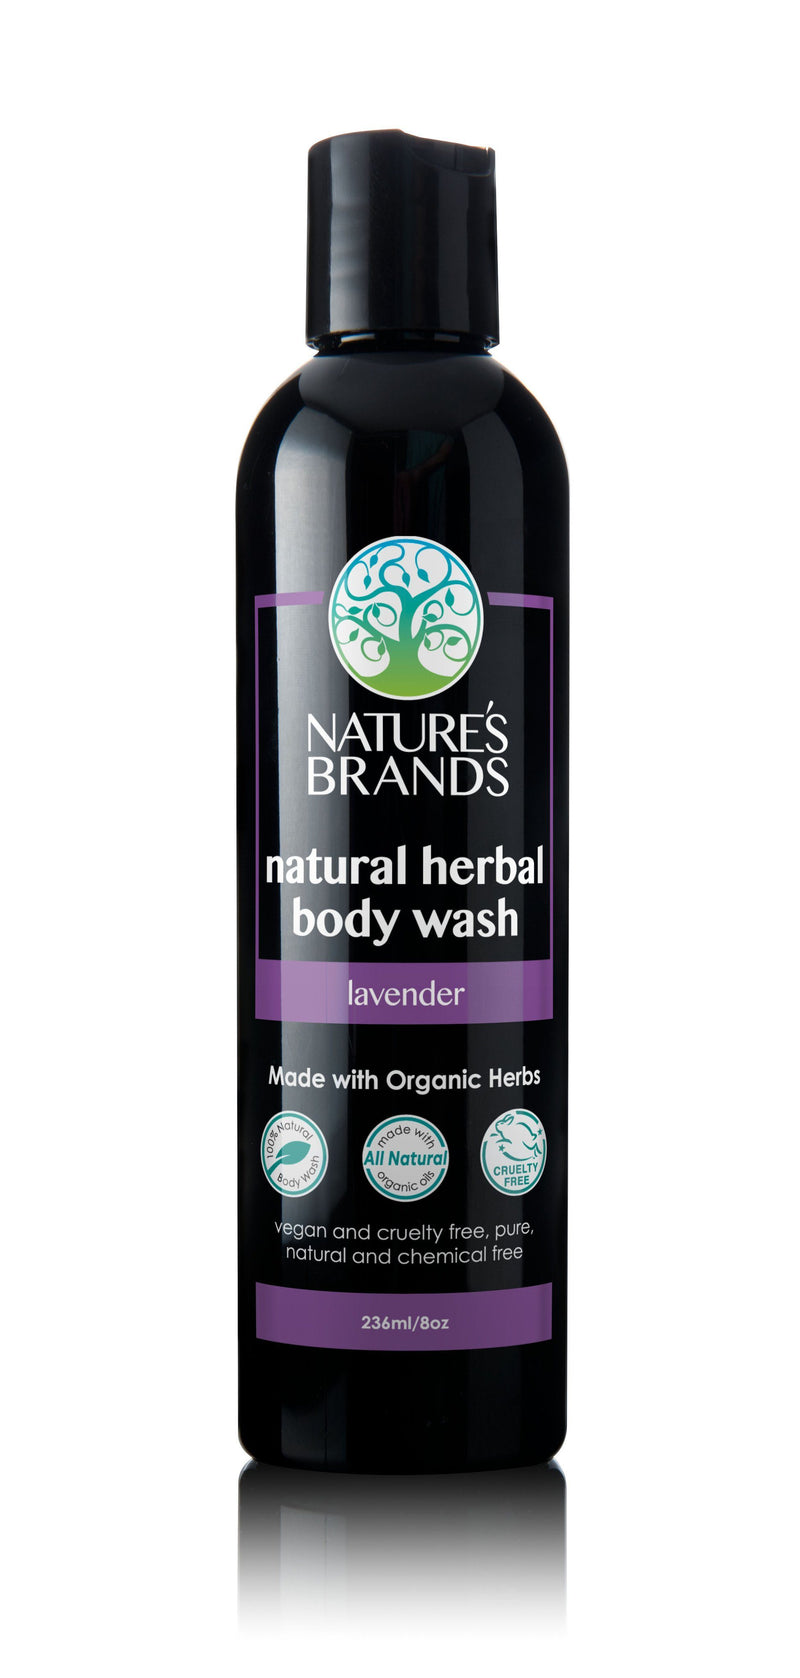 Herbal Choice Mari Organic Herbal Body Wash, Lavender - Herbal Choice Mari Organic Herbal Body Wash, Lavender - Herbal Choice Mari Organic Herbal Body Wash, Lavender